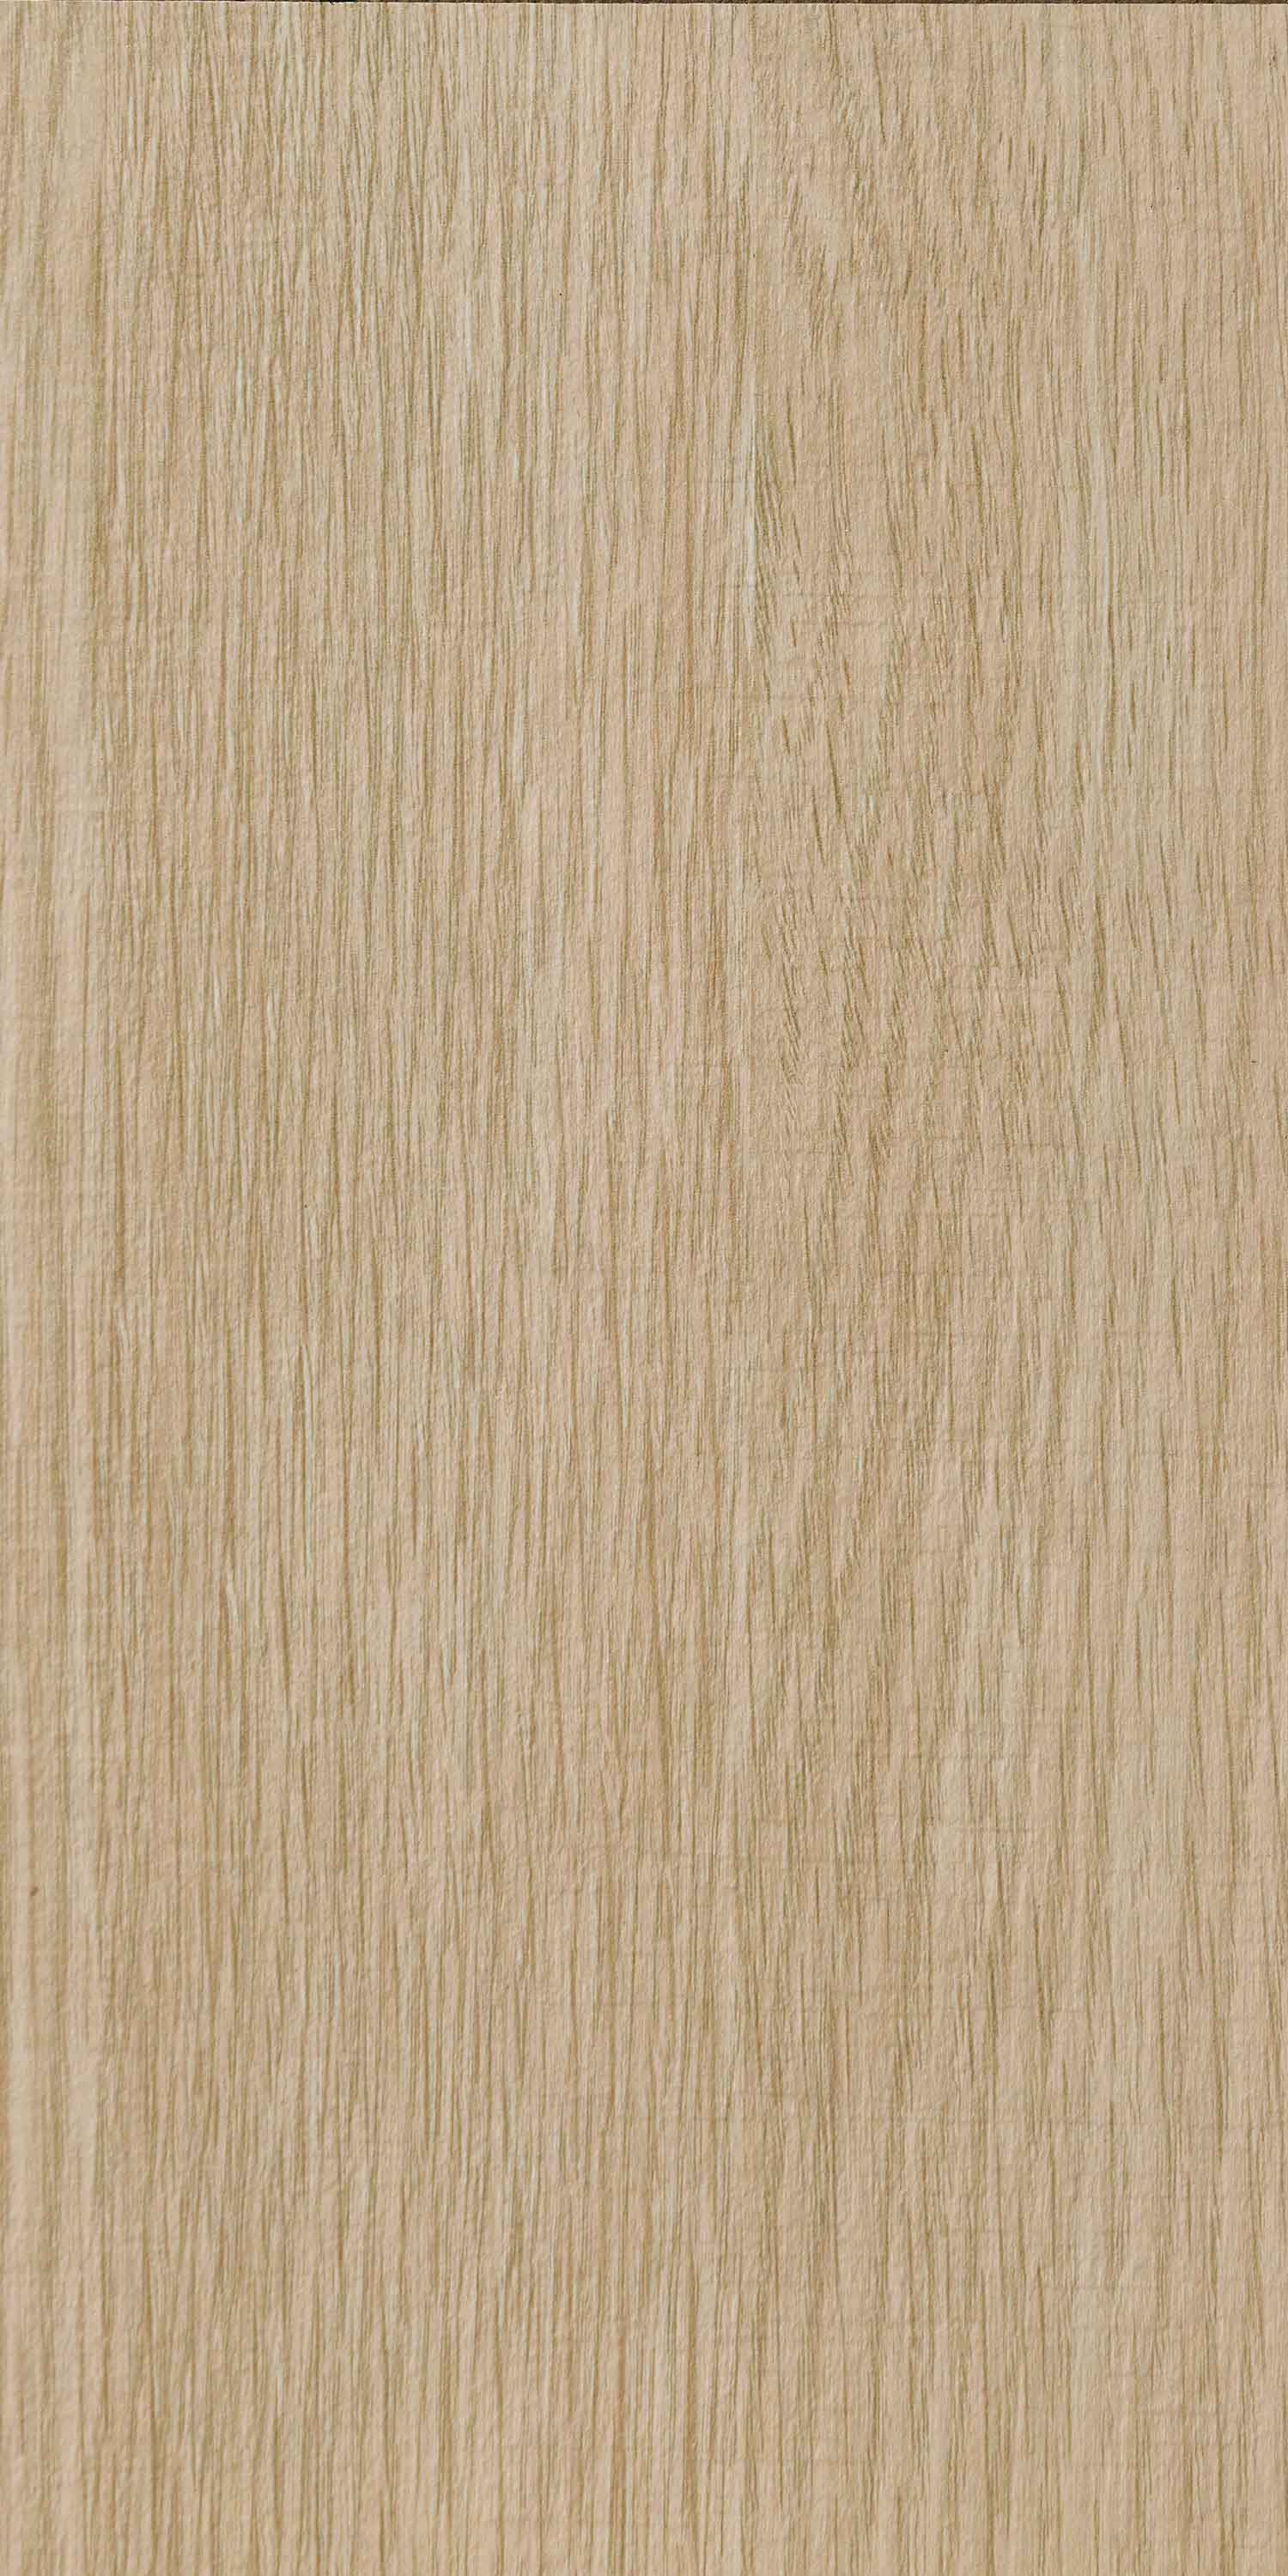 3397 EO Natural Oak 8 ft x 4 ft Texture Evoke Oak Finish Laminate - 1 mm